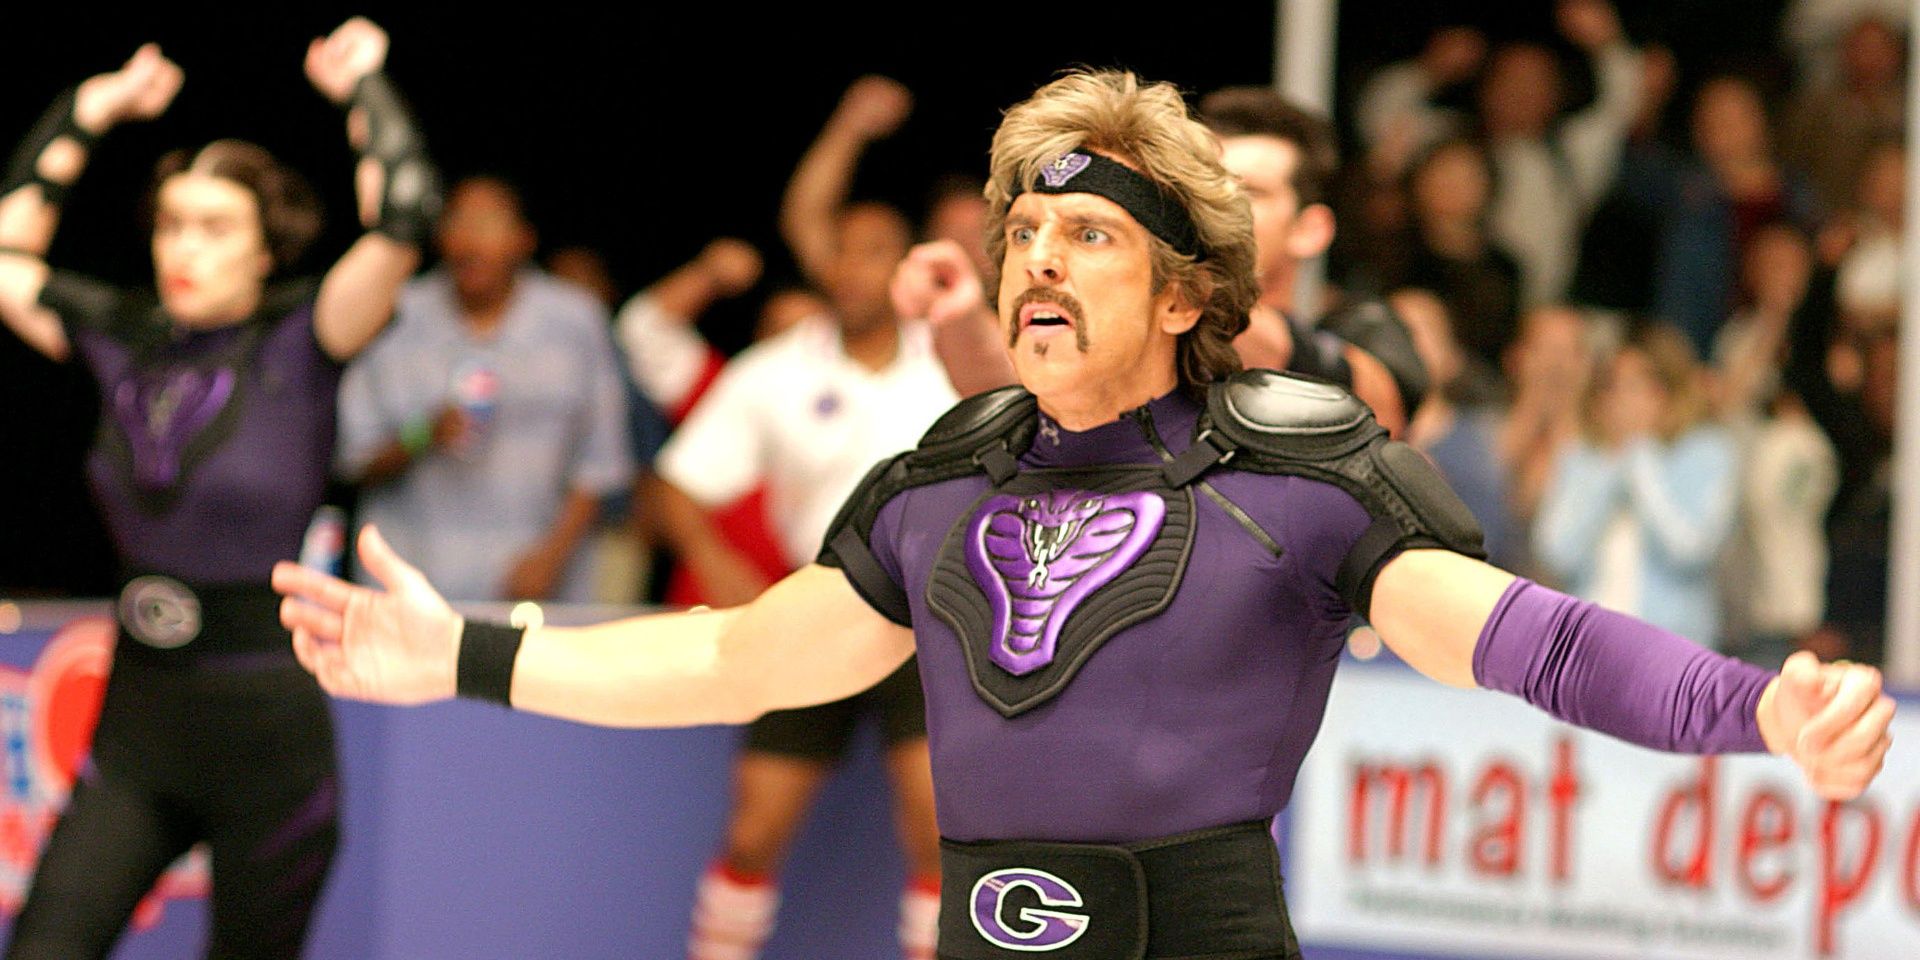 Ben Stiller on the dodgeball court in Dodgeball